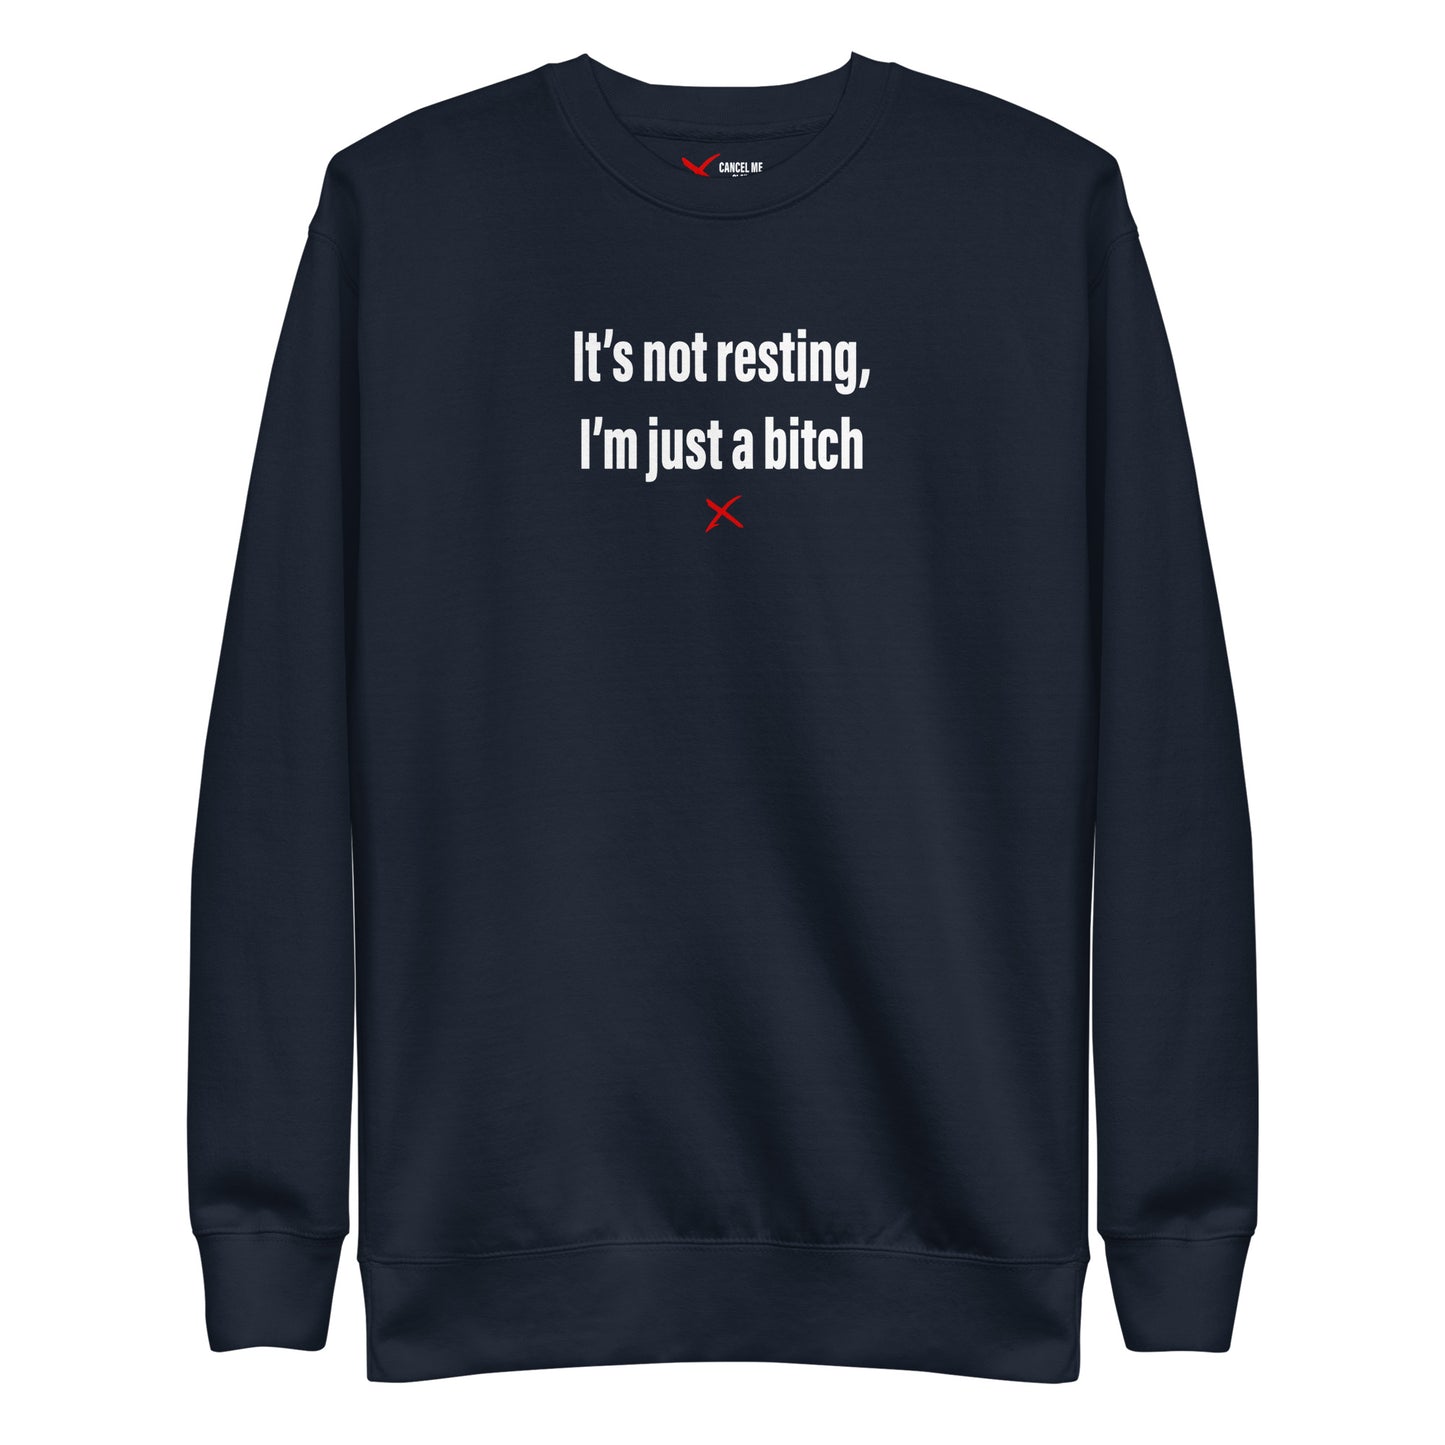 It's not resting, I'm just a bitch - Sweatshirt